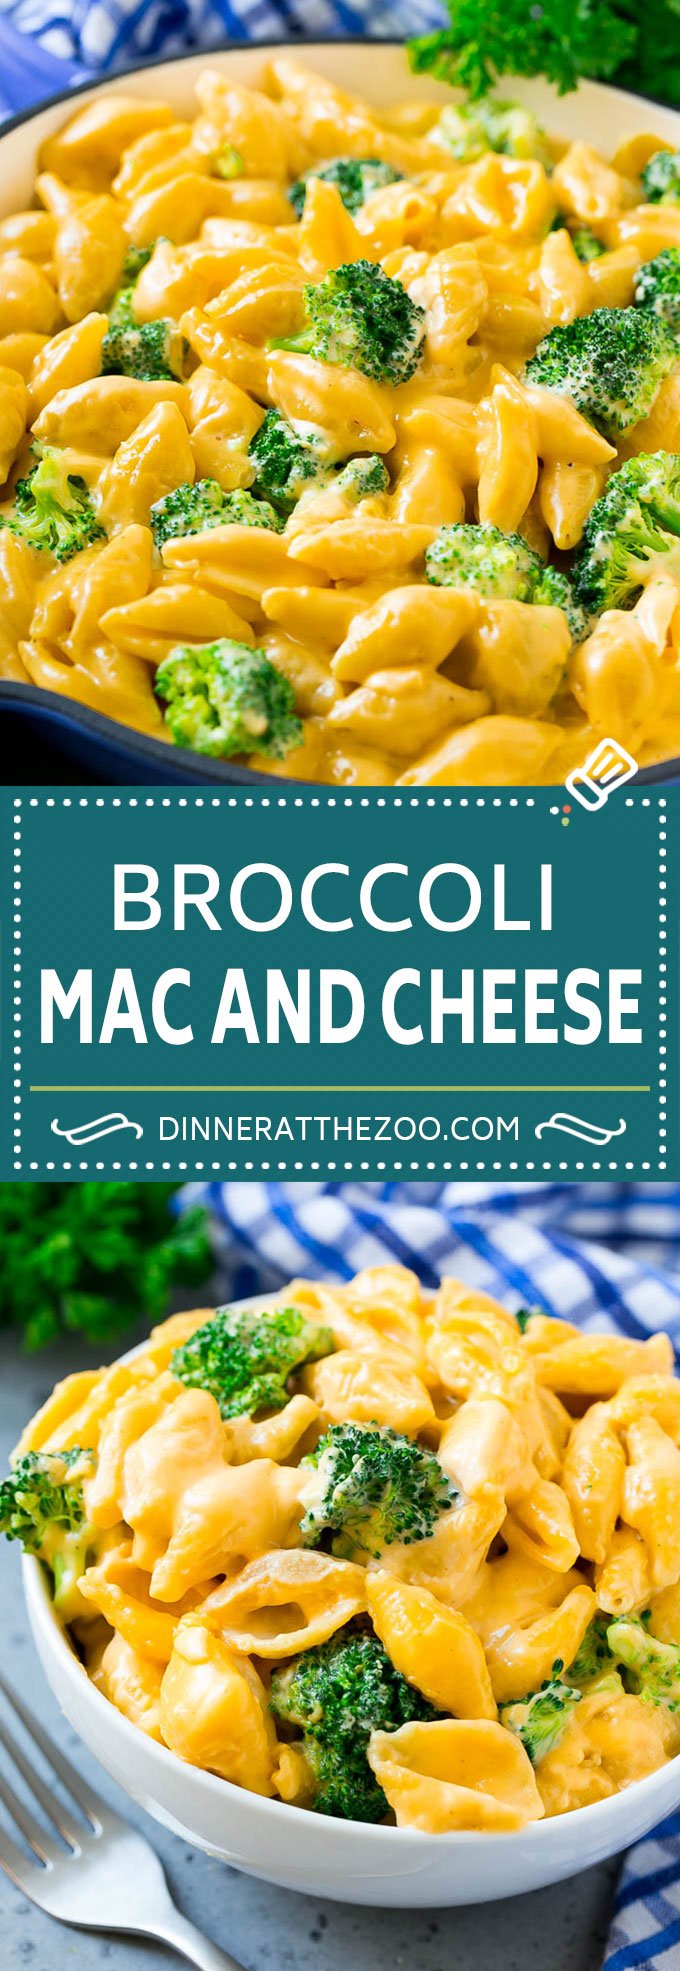 Broccoli Mac and Cheese Recipe | Stovetop Mac and Cheese | Broccoli Macaroni and Cheese #broccoli #macandcheese #cheese #pasta #dinner #dinneratthezoo